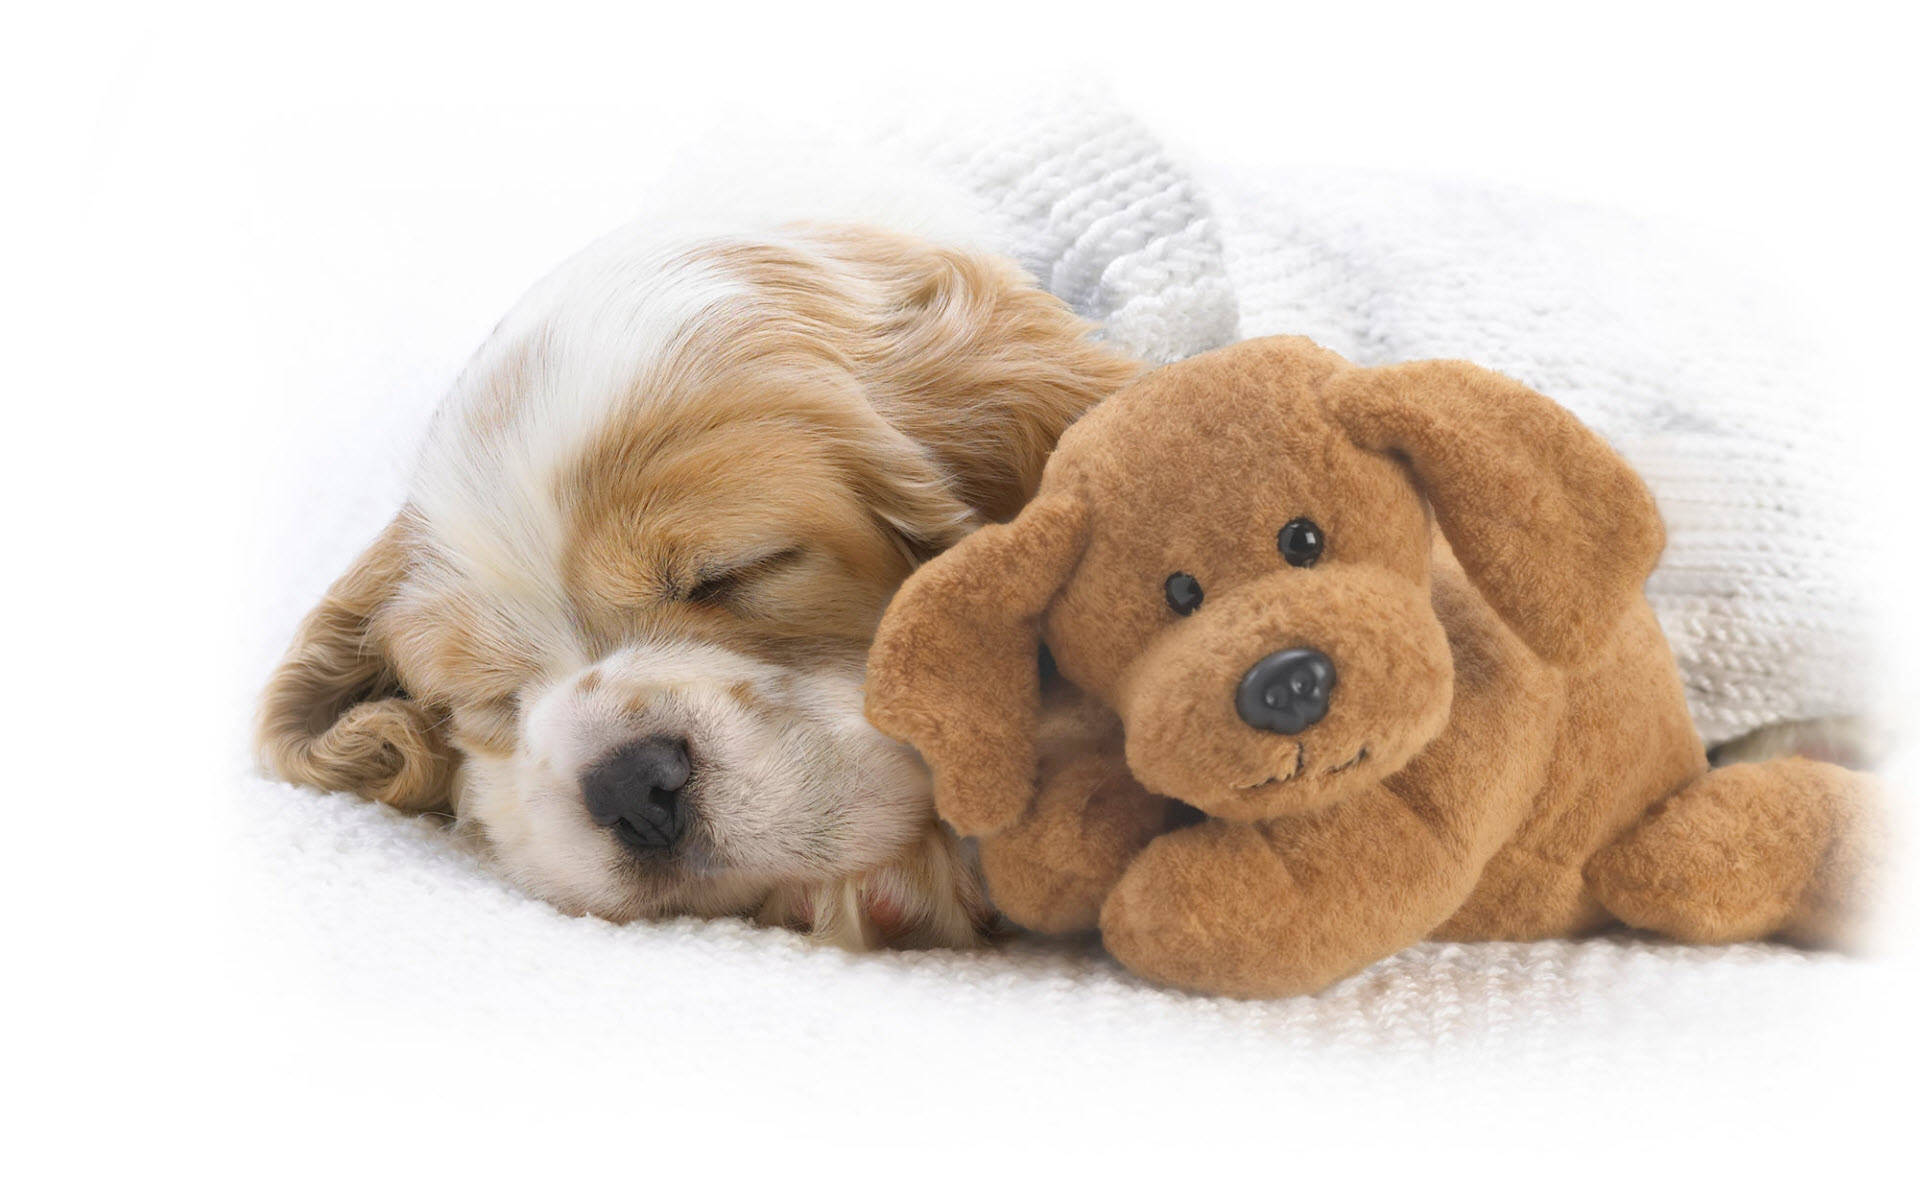 Sleeping Baby Dog With Teddy Bear Wallpaper